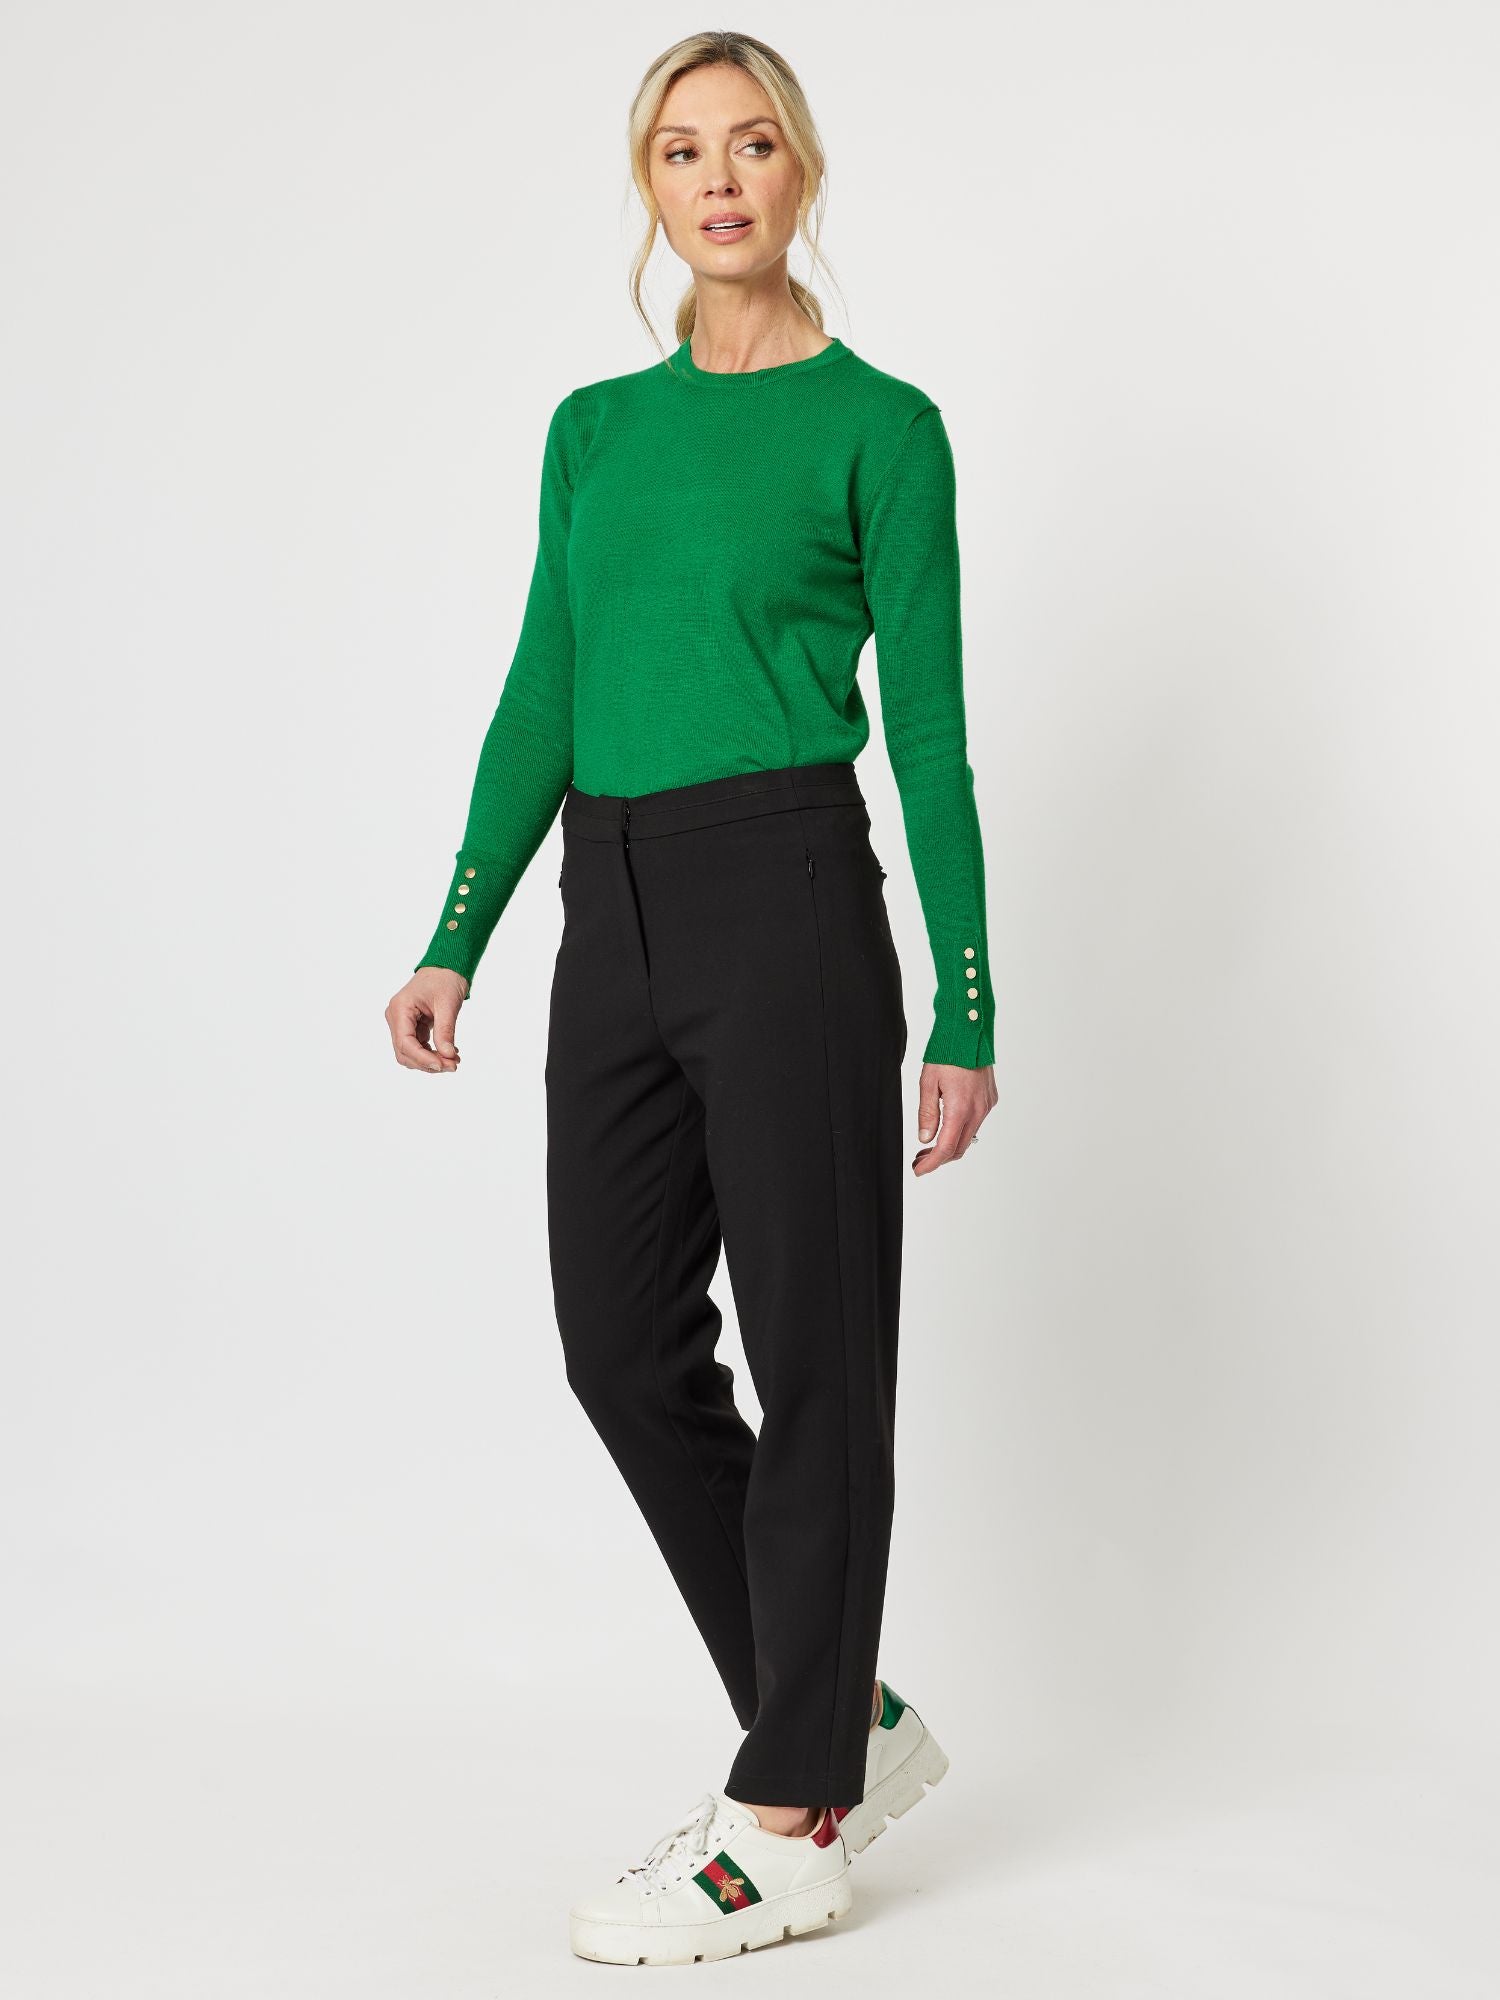 Sara Crew Neck Long Sleeve Knit Top Jumper - Emerald